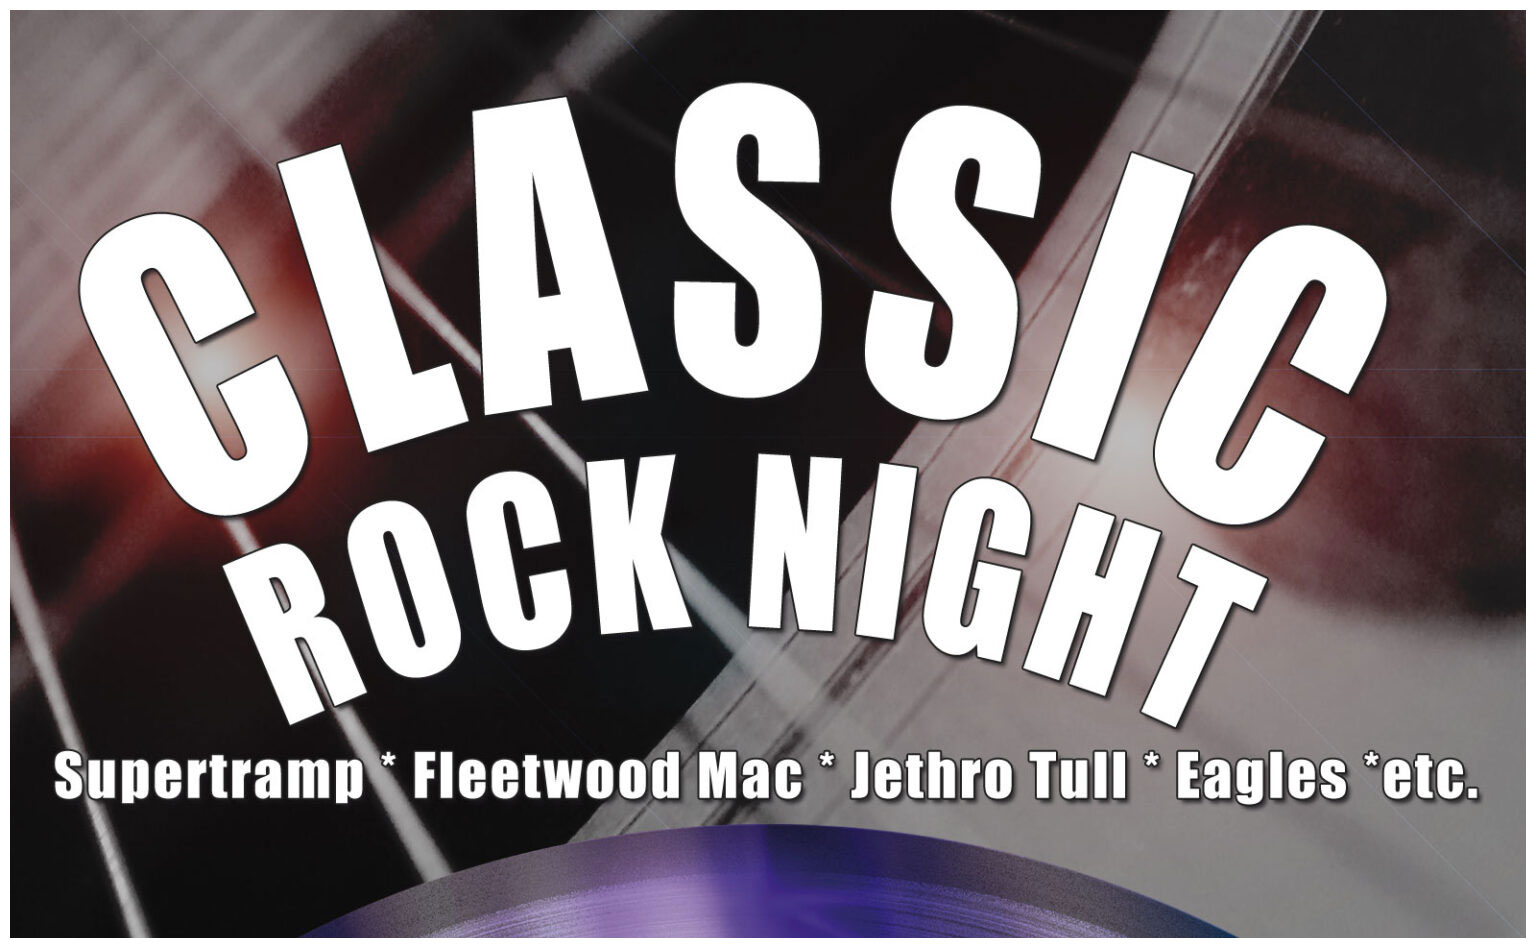 Classic Rock Night im Ballhaus Spandau